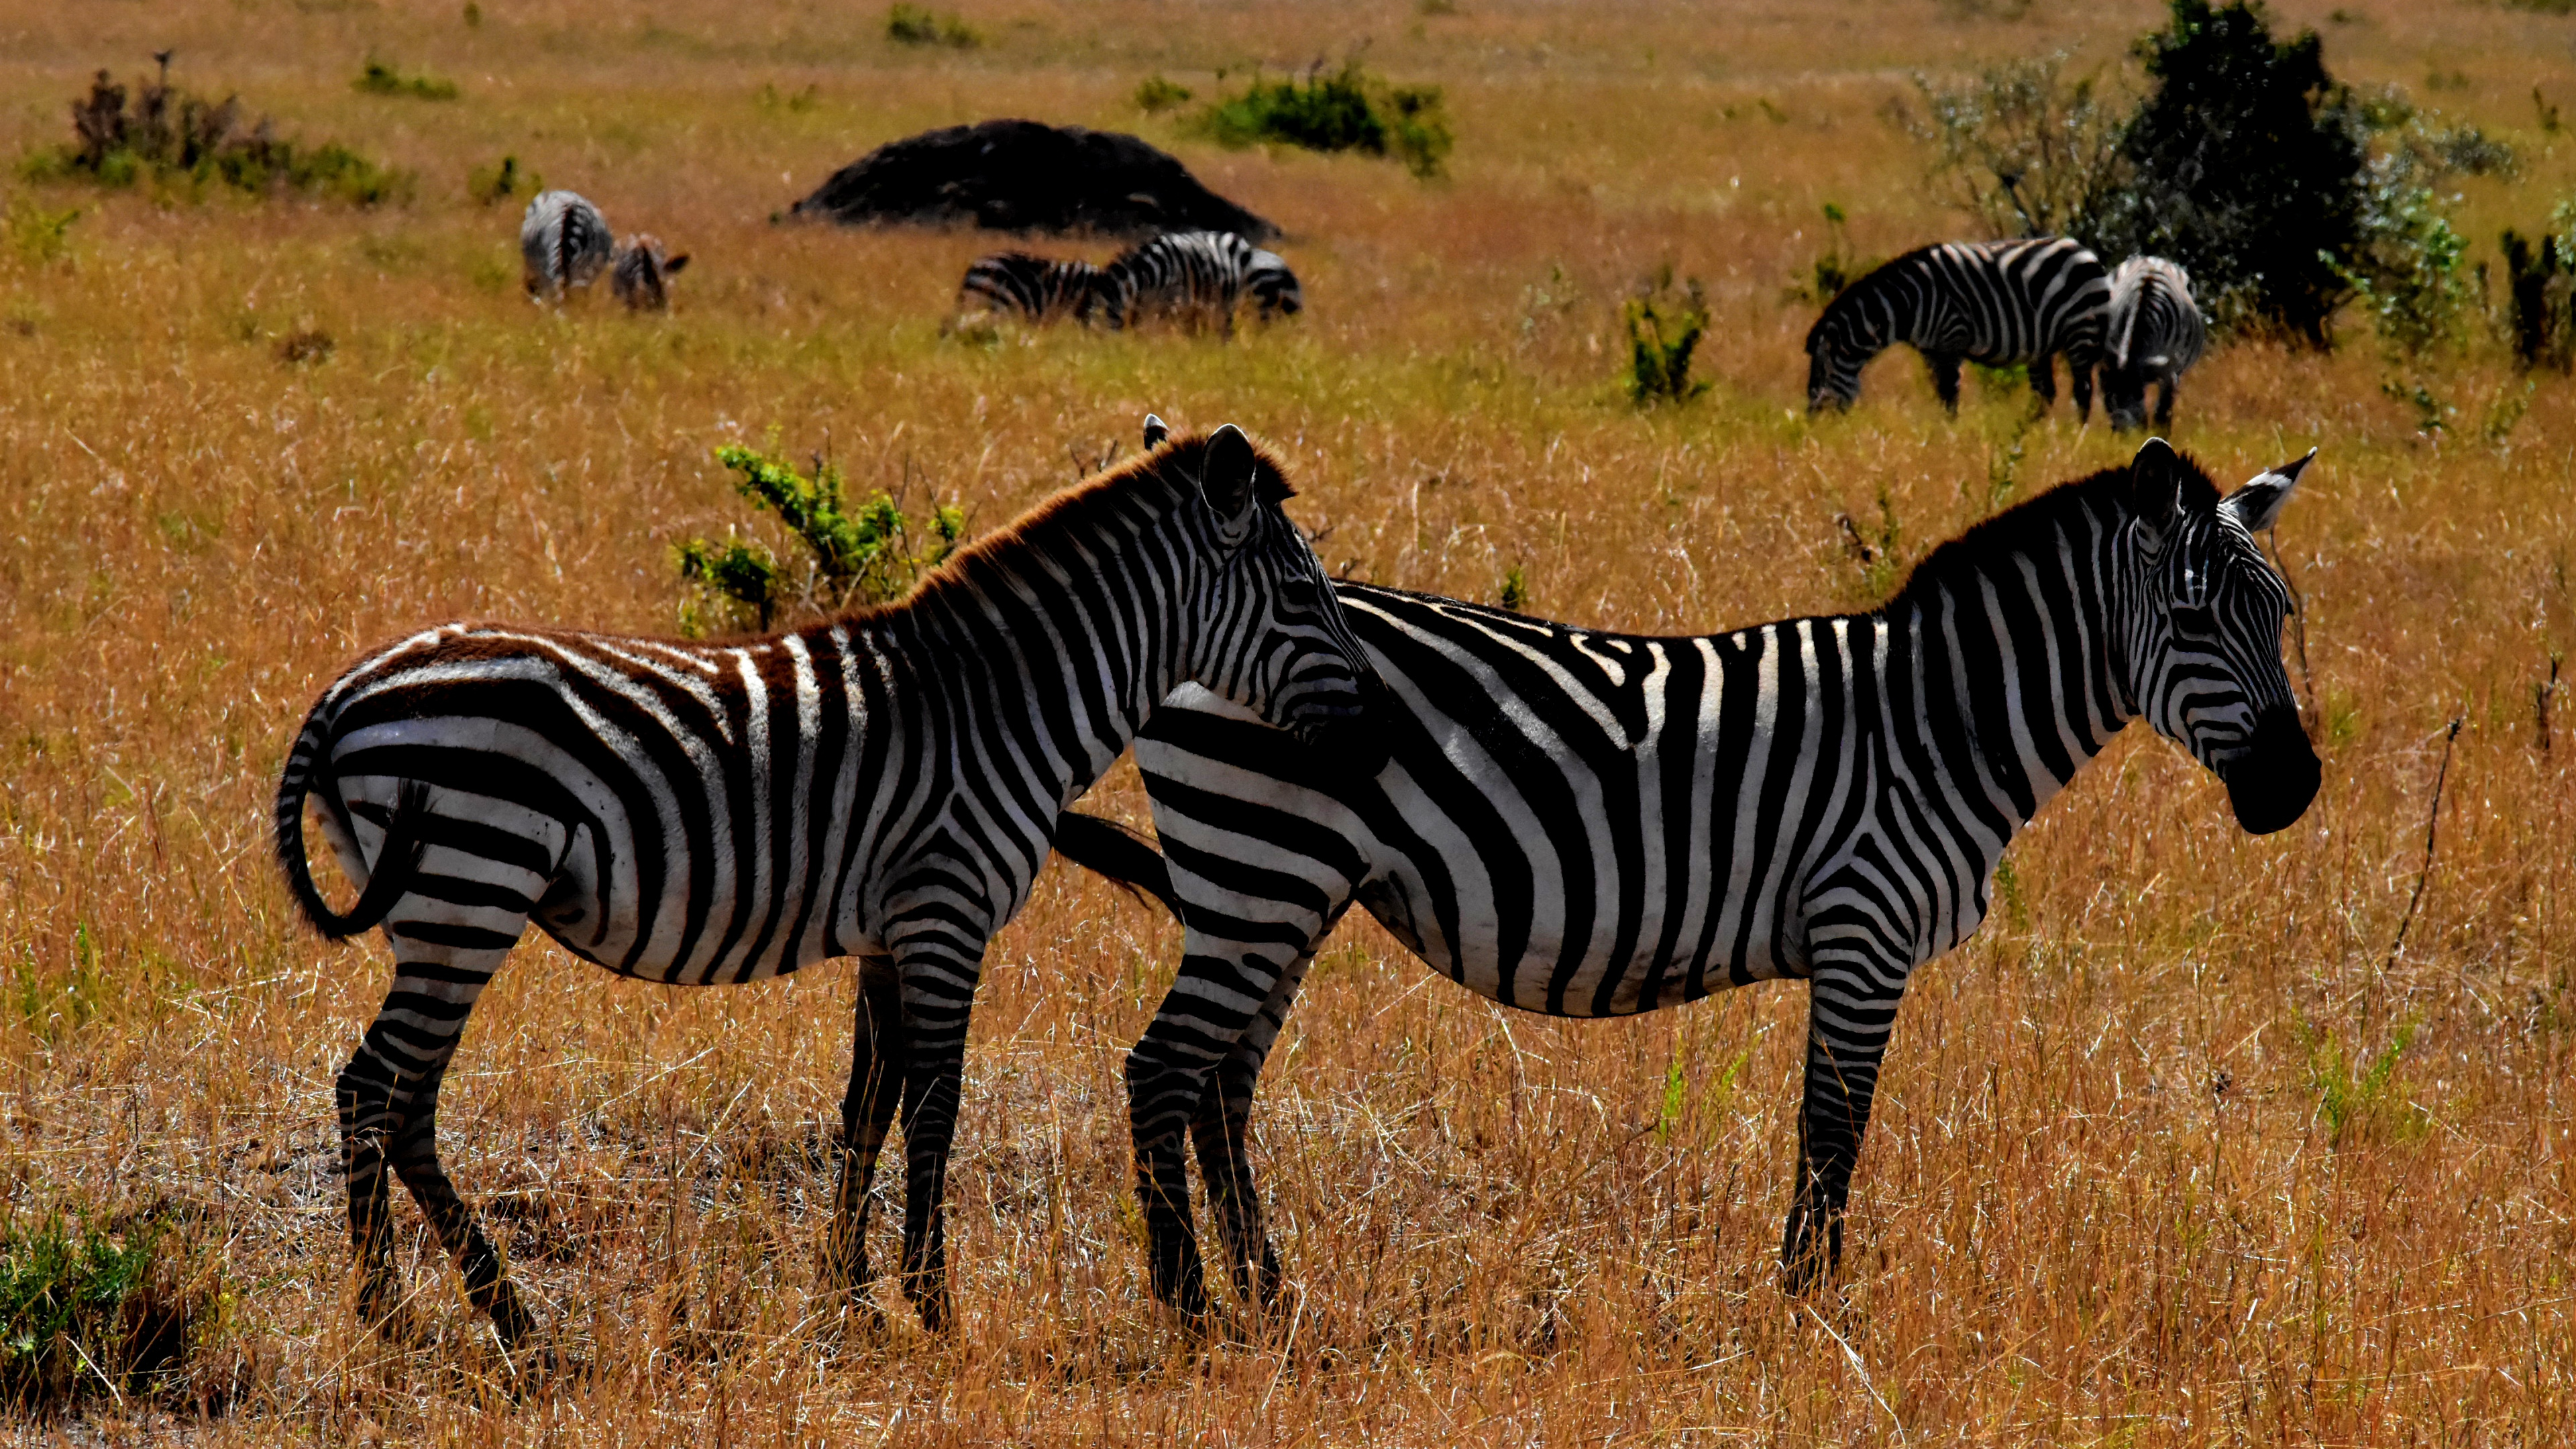 Zebra on Brown Grass Field During Daytime. Wallpaper in 3840x2160 Resolution